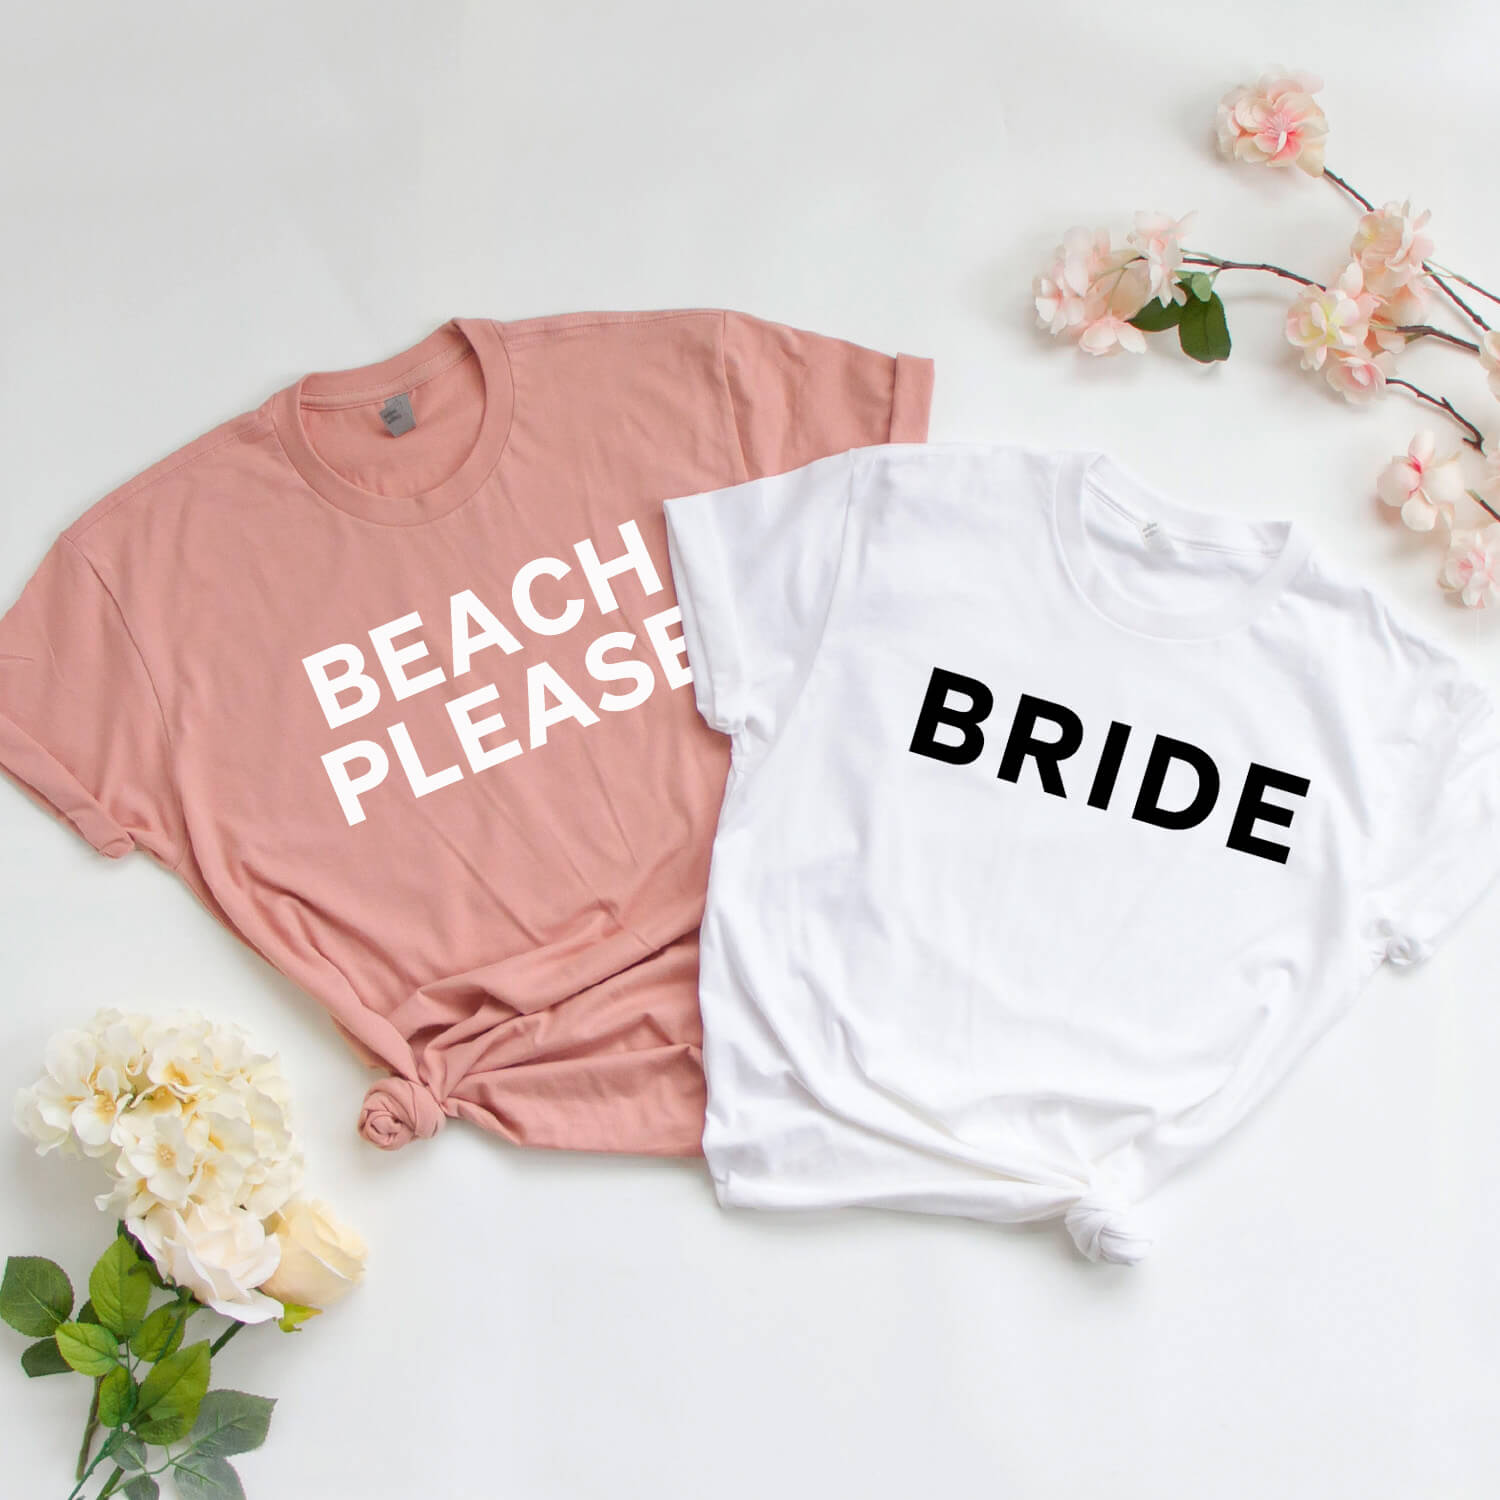 Beach Please, Bride Bachelorette Party Tees